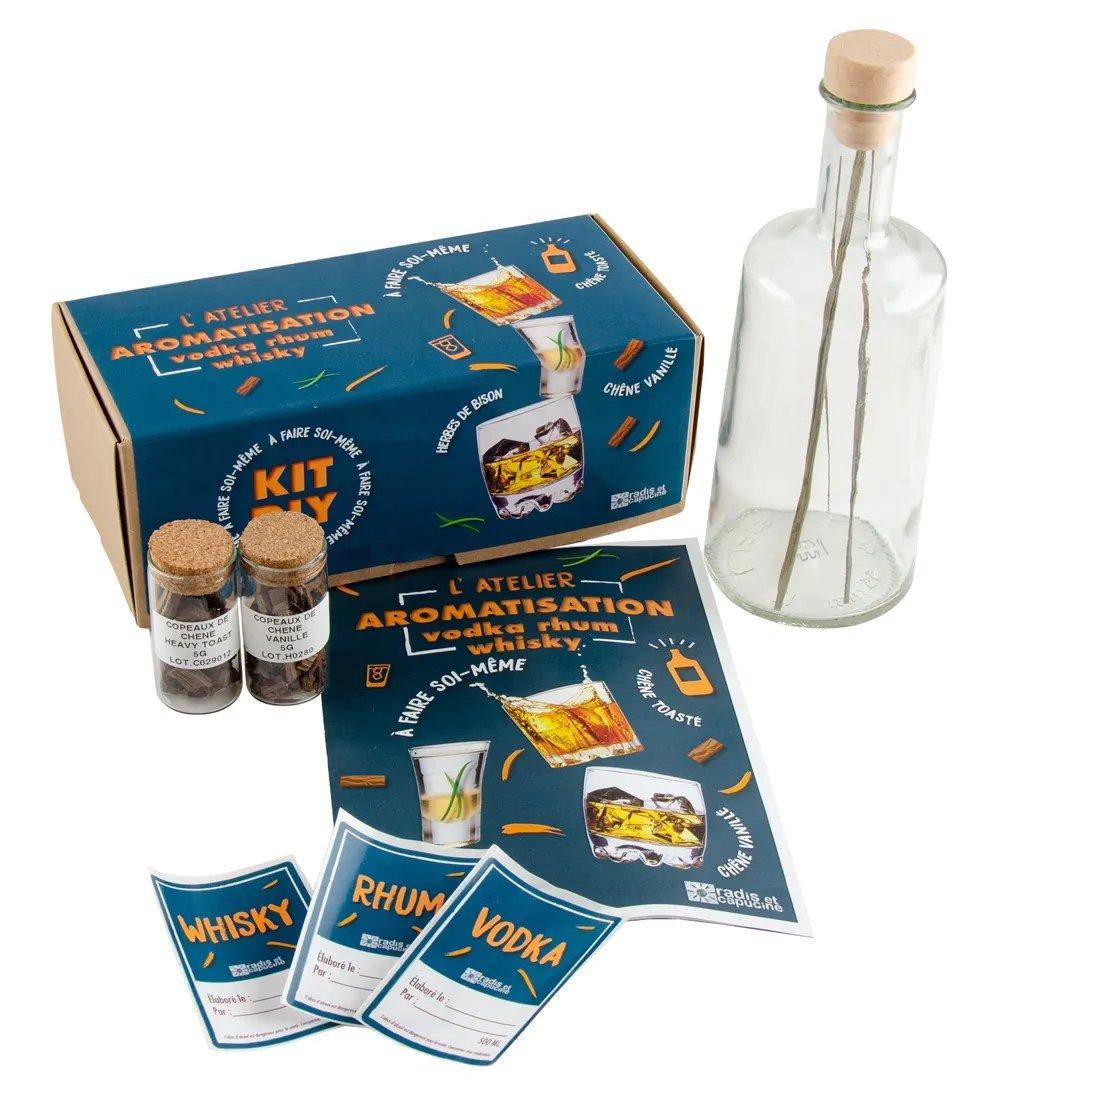 Atelier aromatisation Rhum, Vodka, Whisky - Coffret DIY Radis et Capucine 